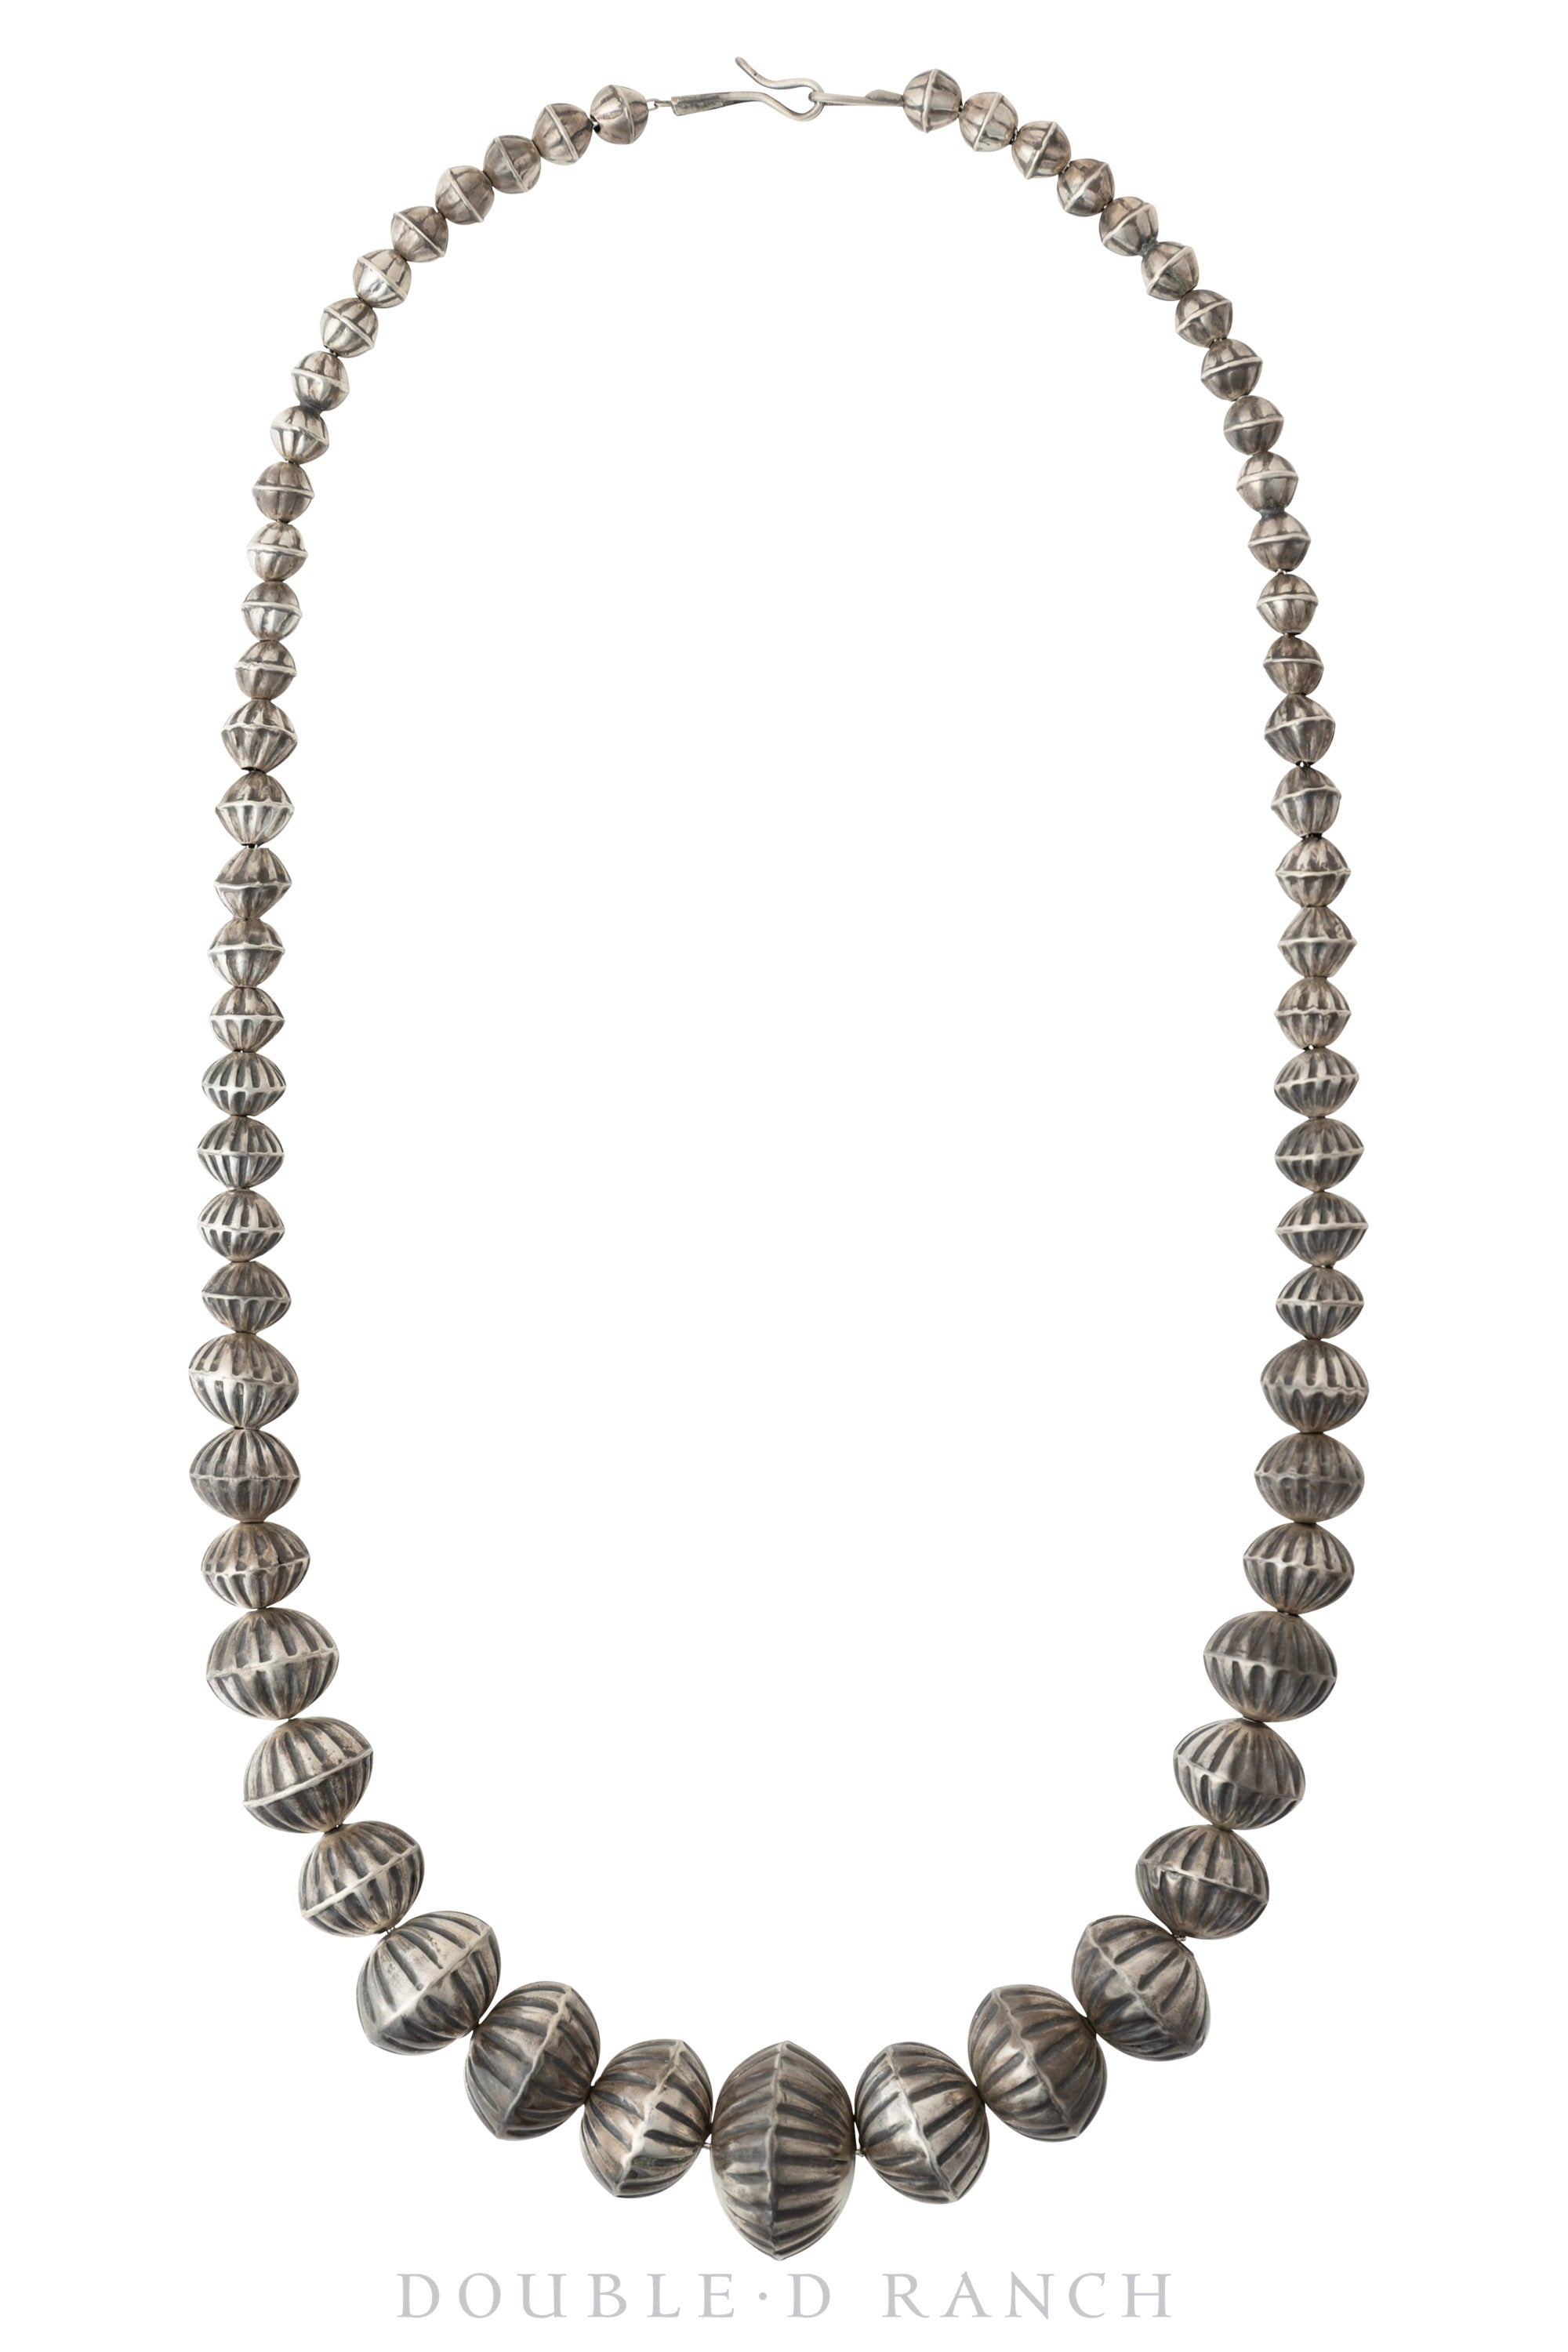 Necklace, Bead, Dessert Pearls, Graduated Melon Beads, Vintage ‘60s, 1652